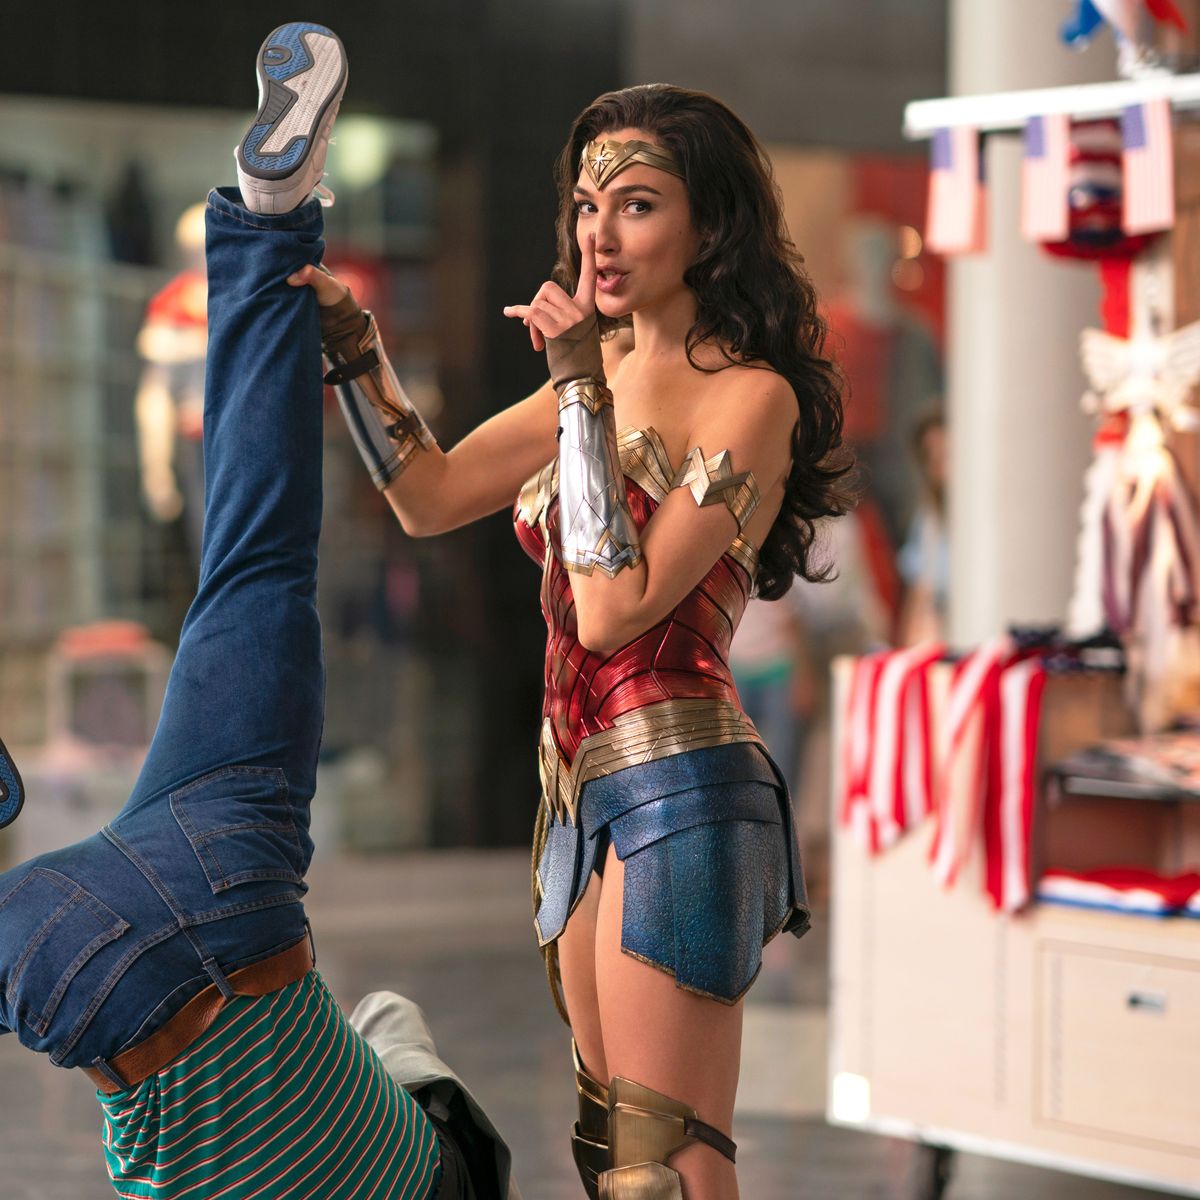 Wonder Woman 2 Facts | Movie Sequel Release Date, Cast, Spoilers